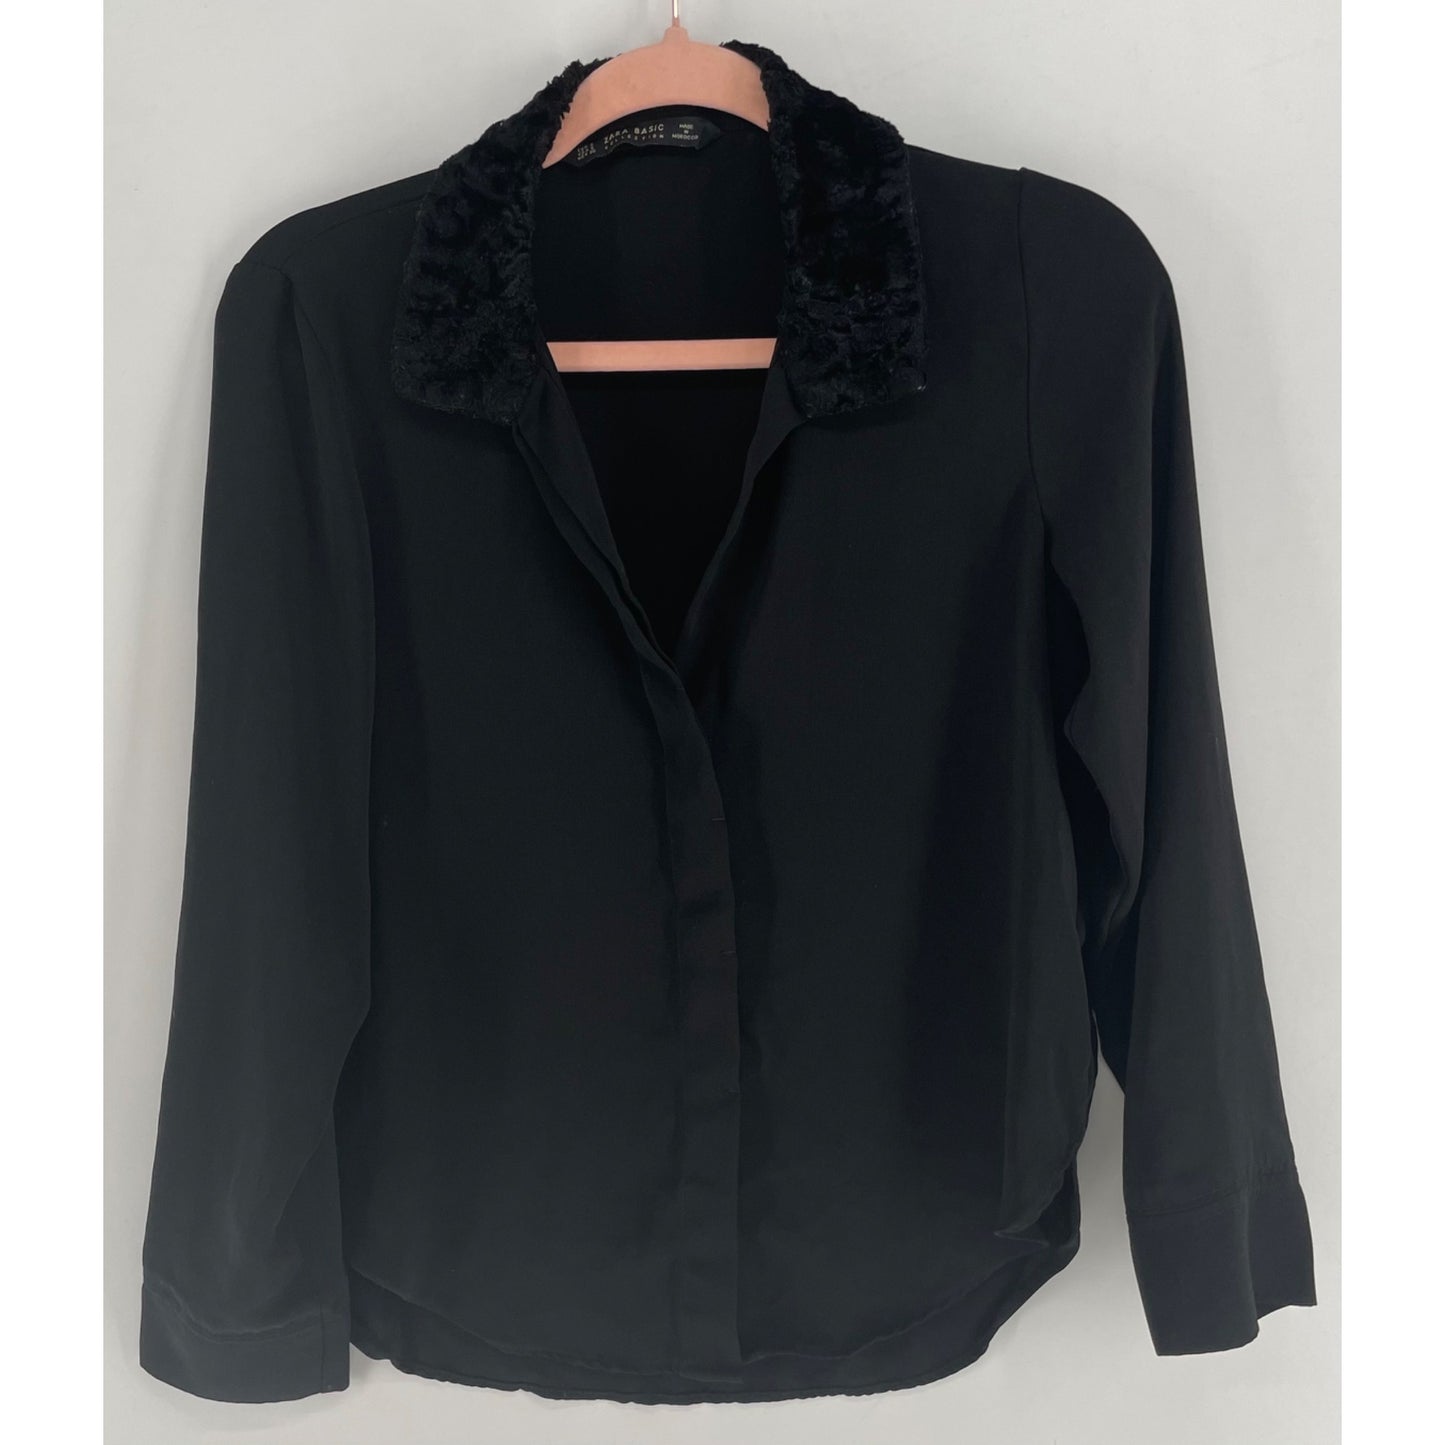 Zara Women's Size Small Black Long-Sleeved Button-Down Top W/ Faux Fur Collar